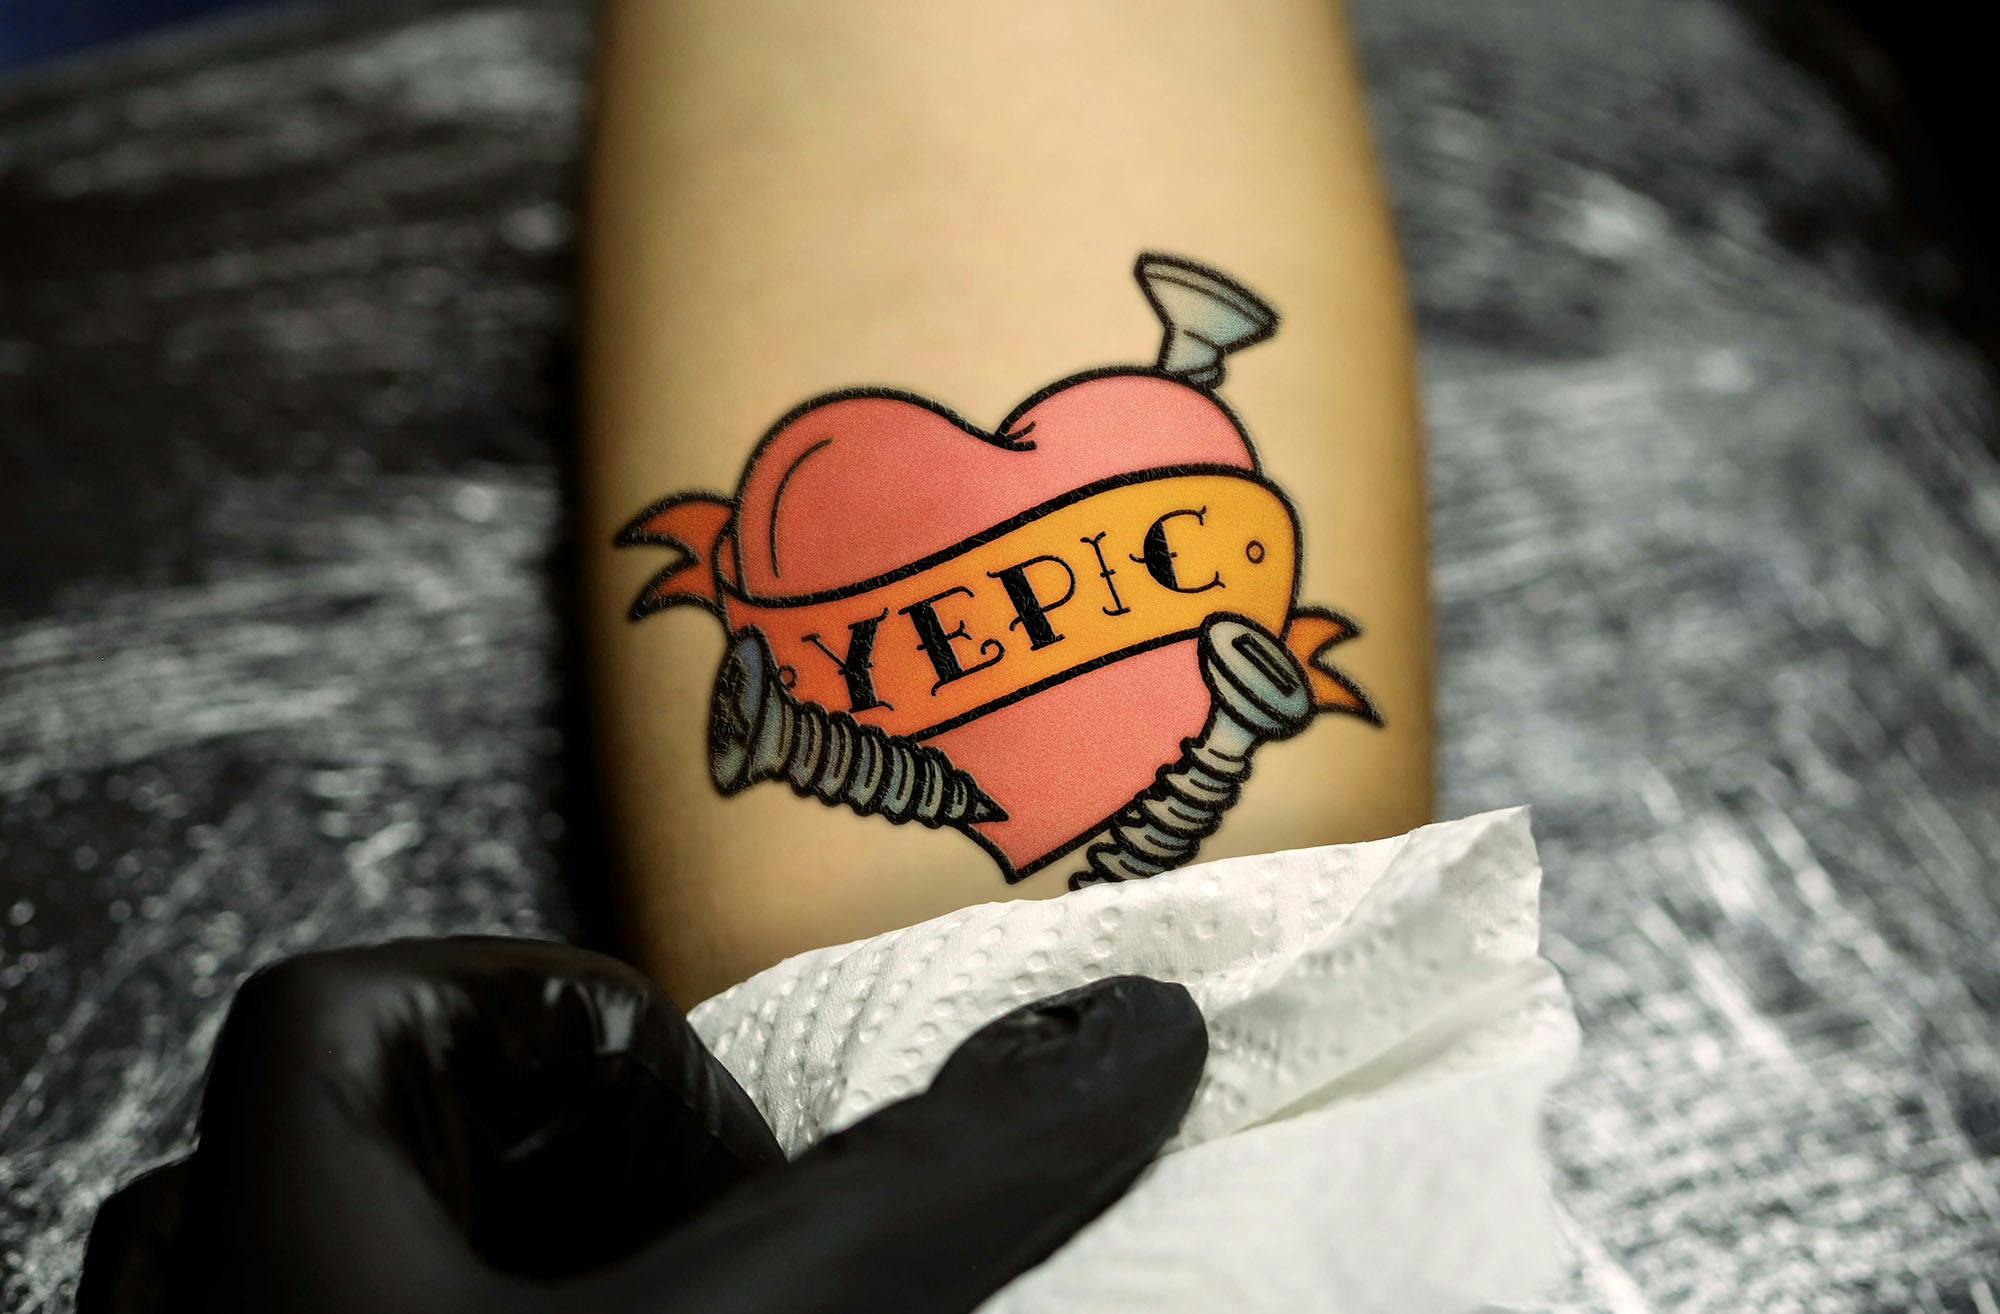 Yepic logo as a tattoo on forearm.